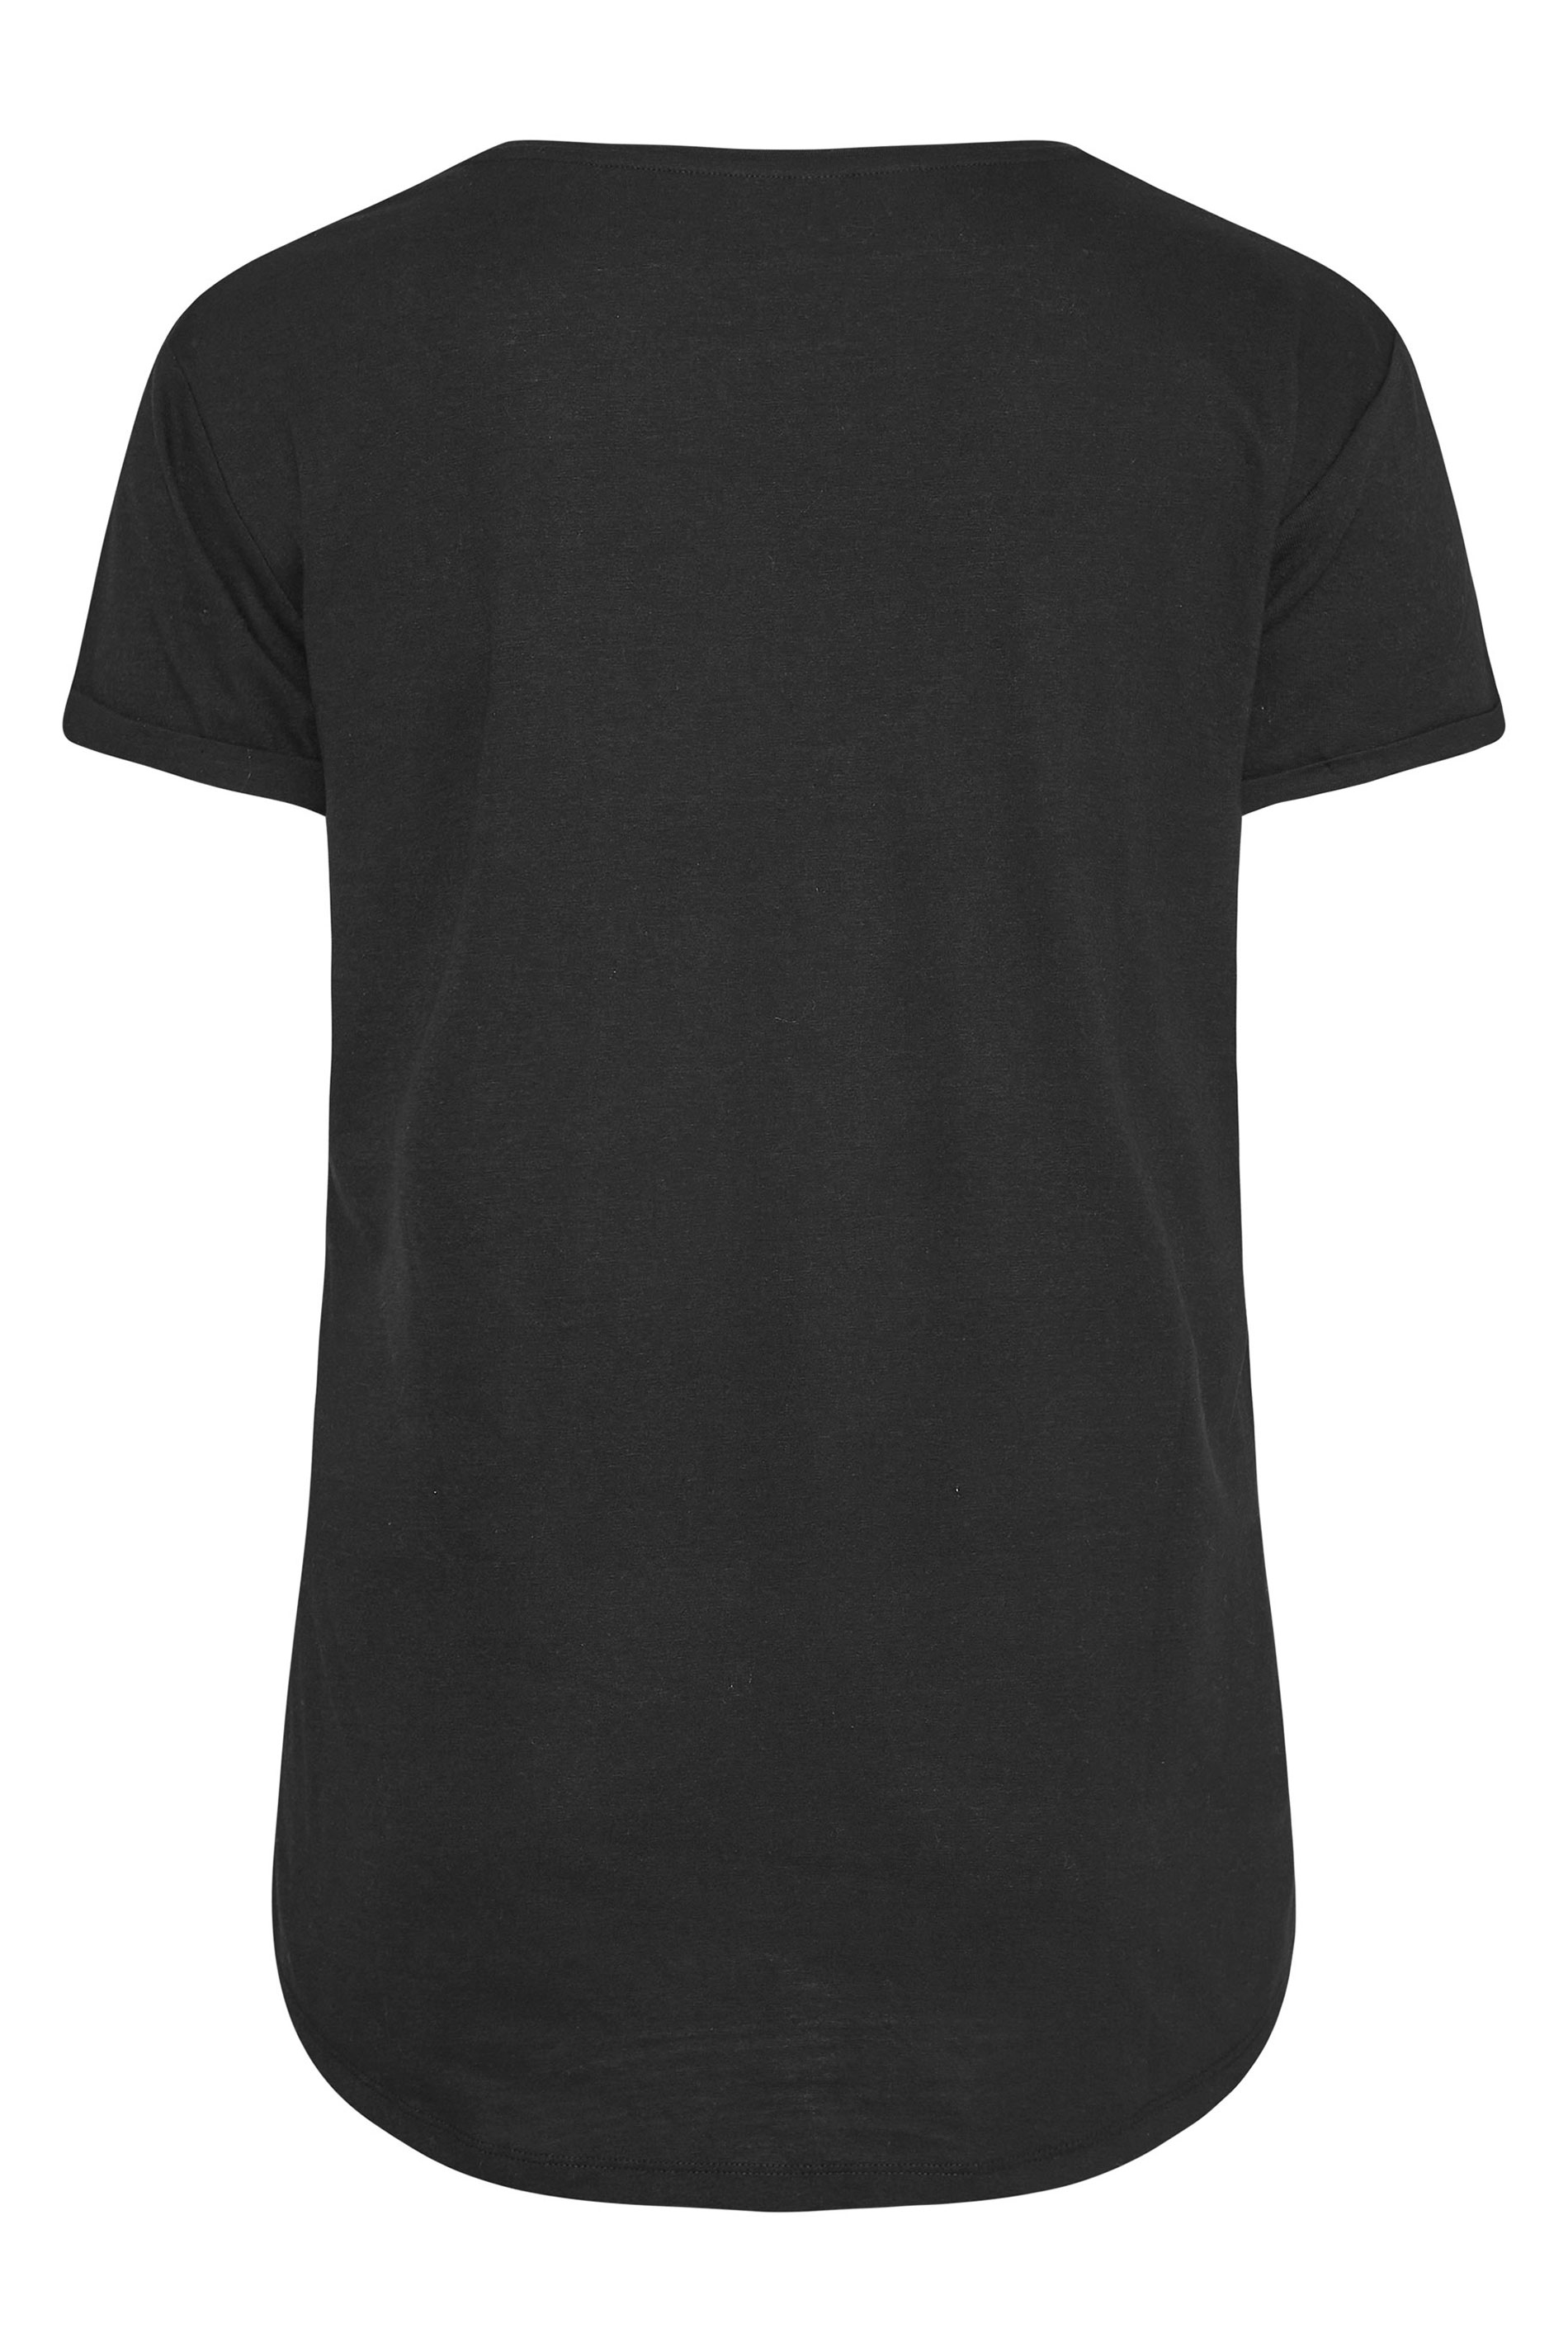 Grande taille  Tops Grande taille  T-Shirts | T-Shirt Noir Coeurs & Lèvres - WD73025